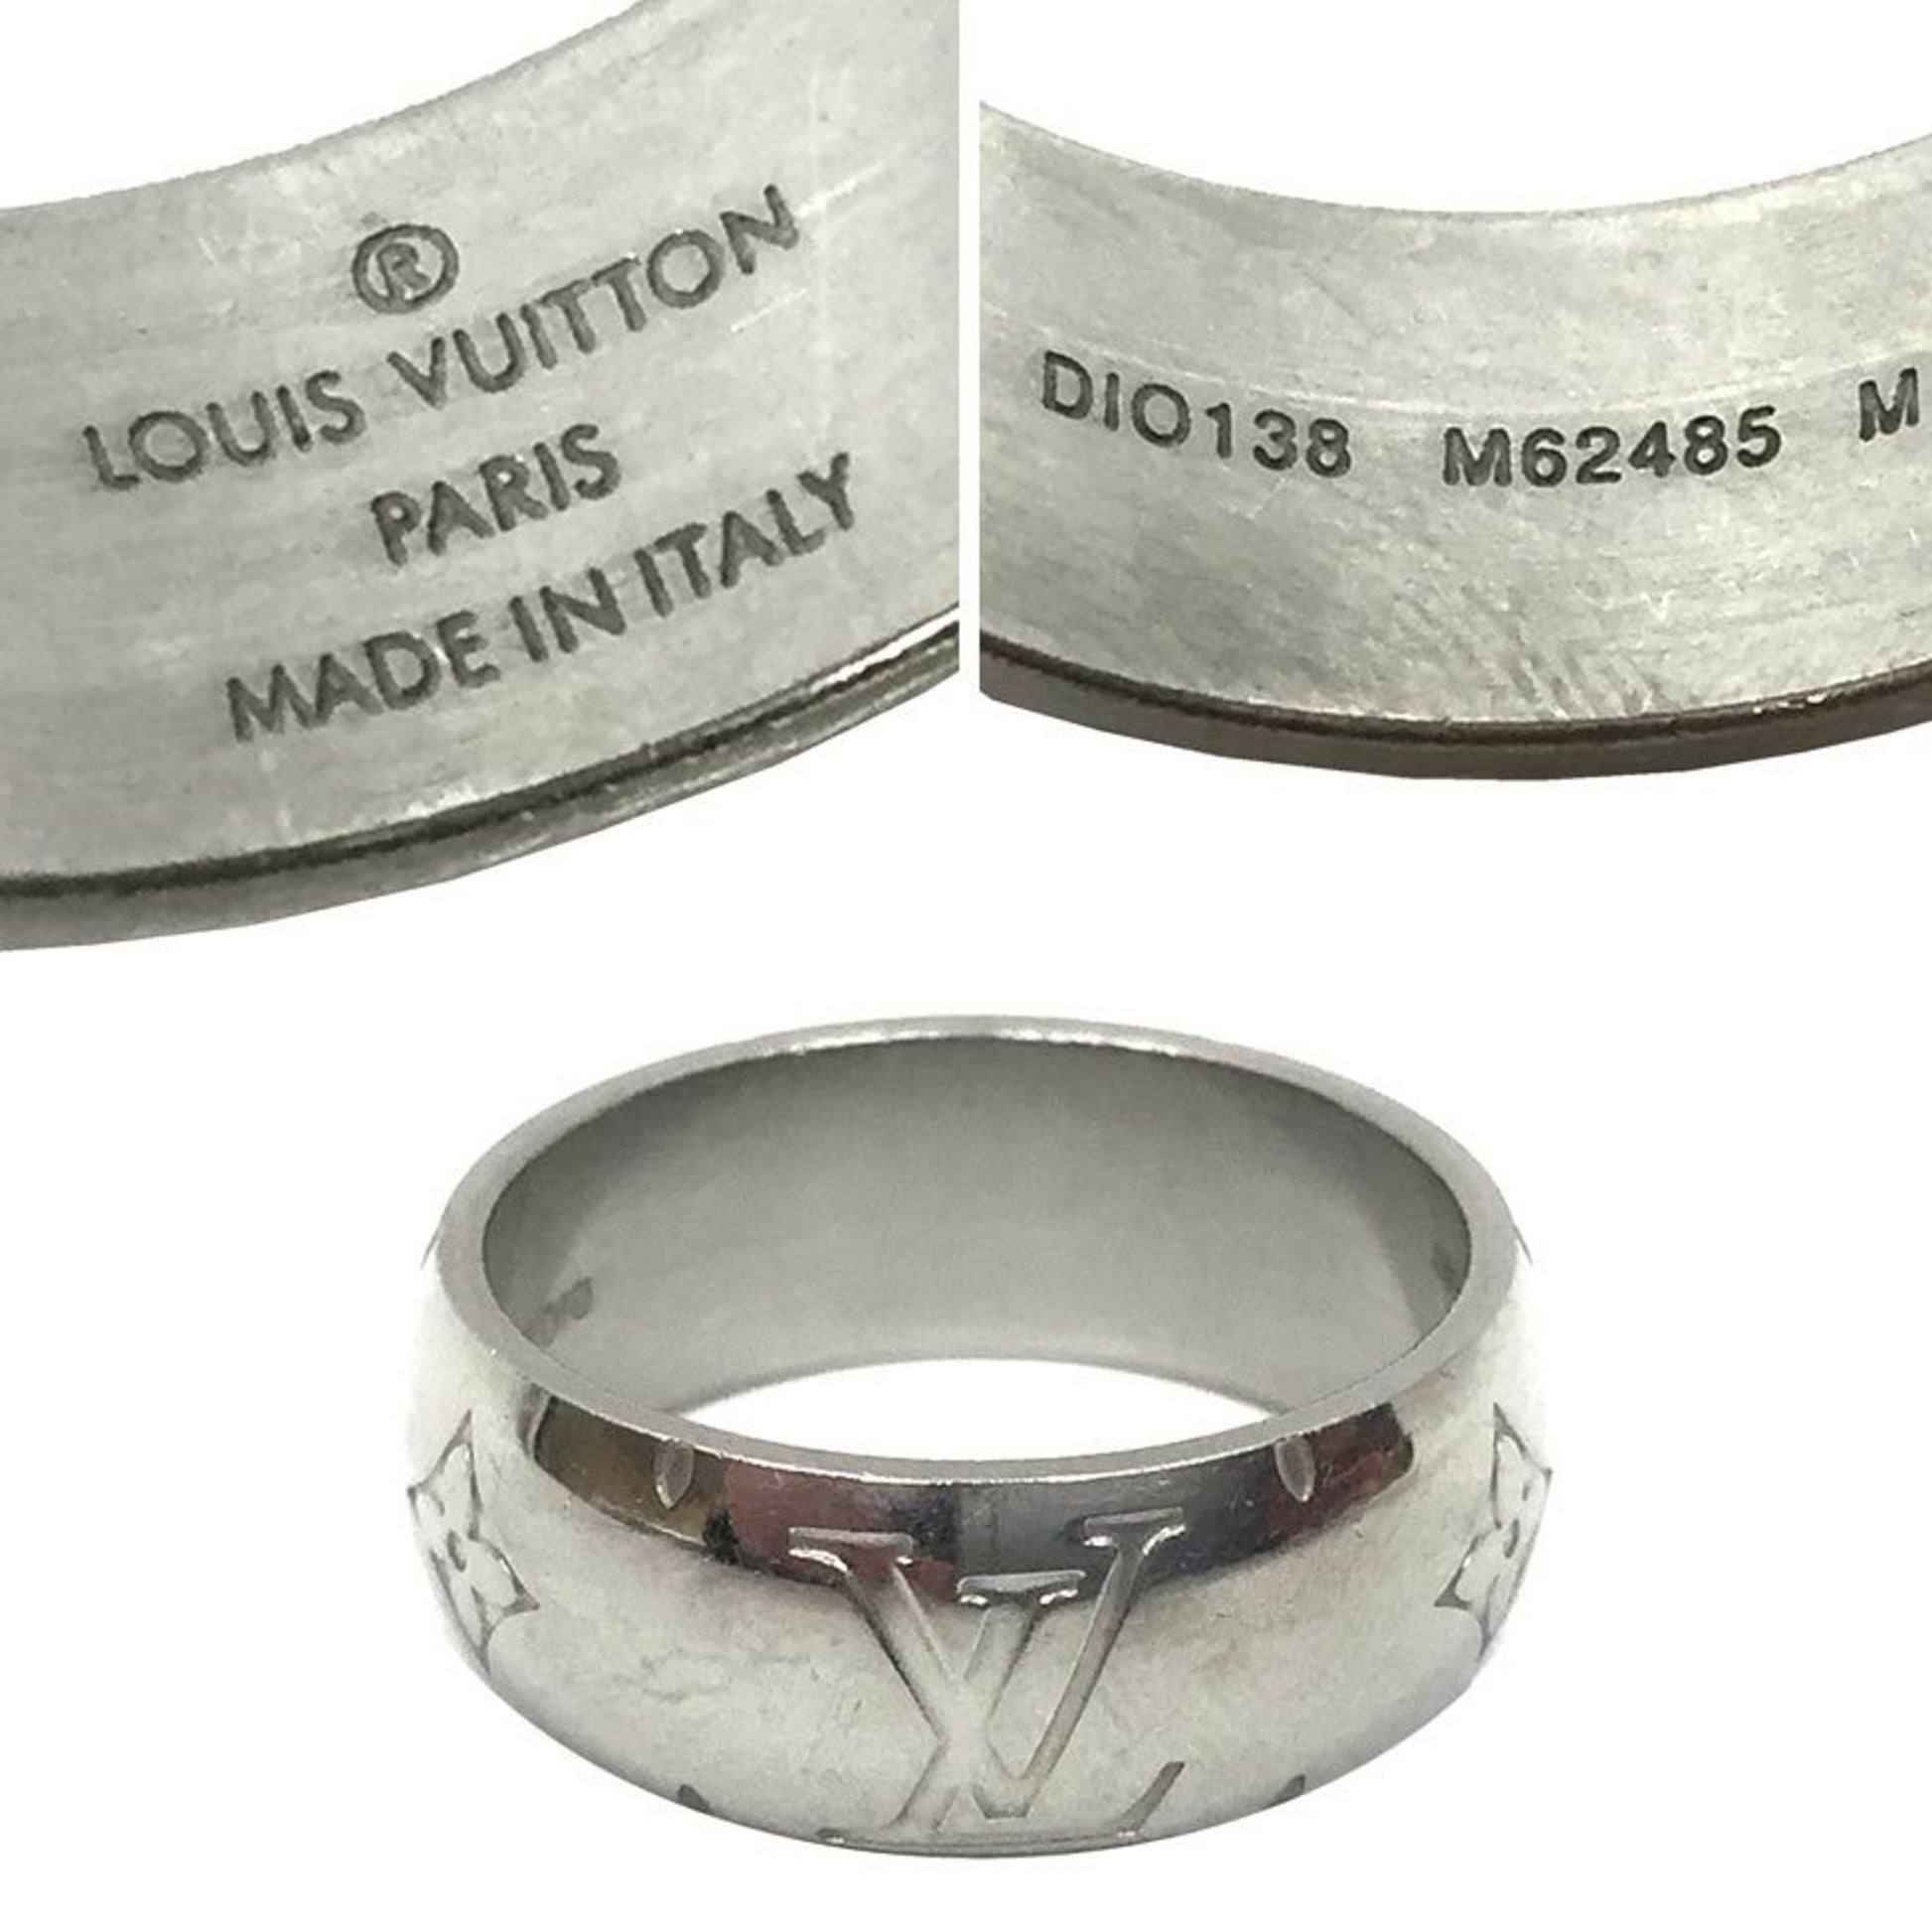 Louis Vuitton ring monogram M62485 size M No. 19 pendant top men's sil